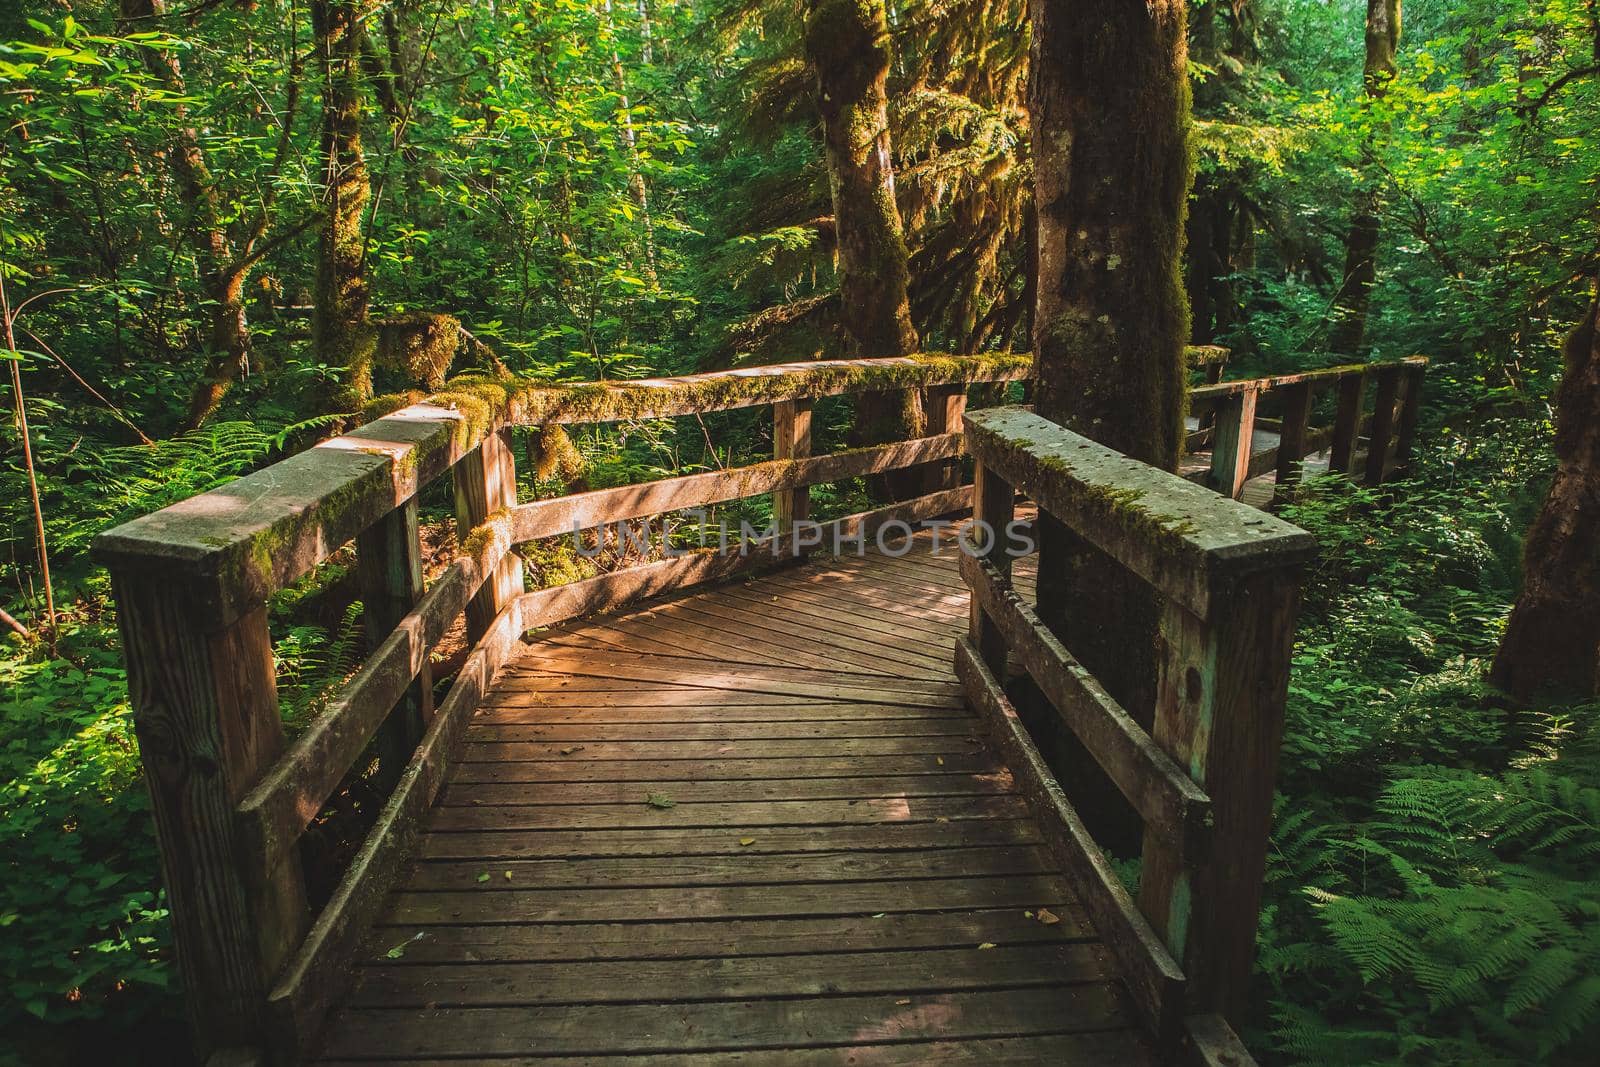 Mystic journey through the fairy tale forest. Wooden boardwalk trail through Wildwood Recreation area, Oregon, USA.